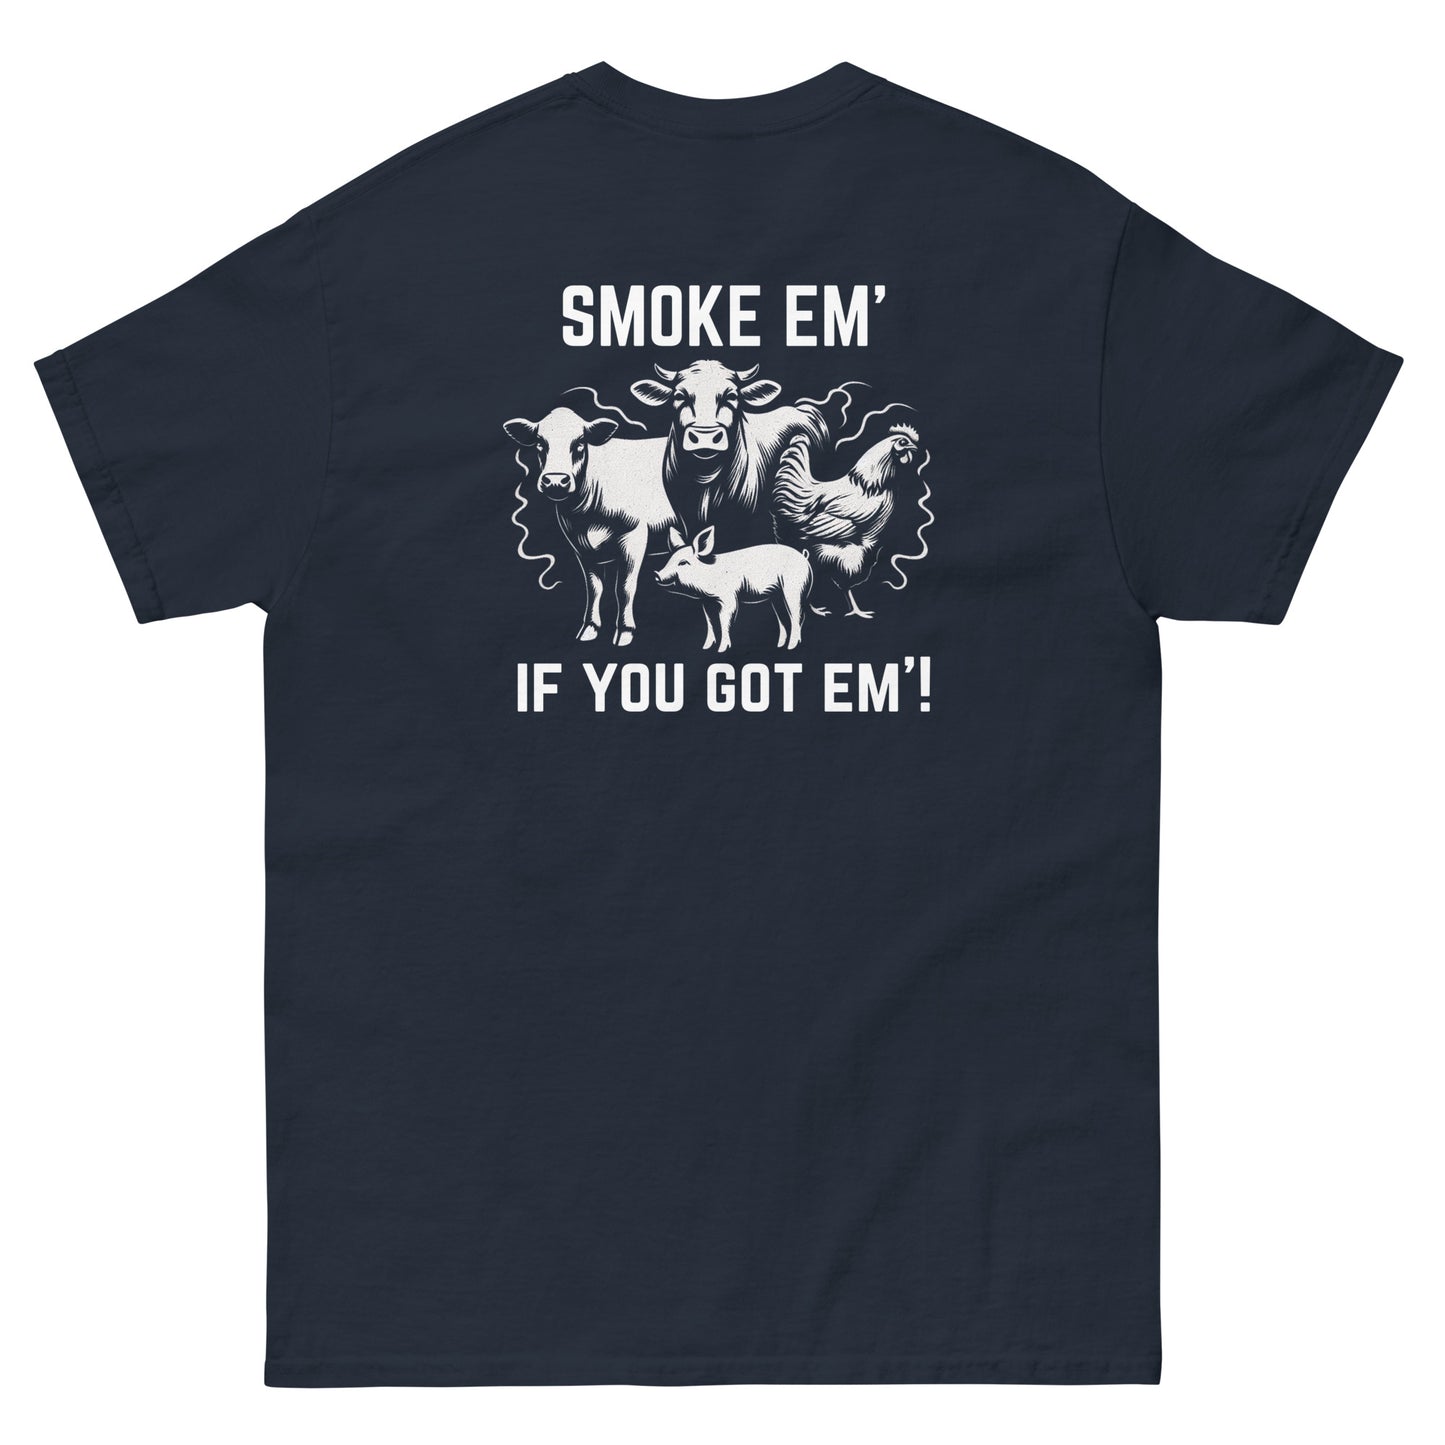 Smoke Em'! Tee